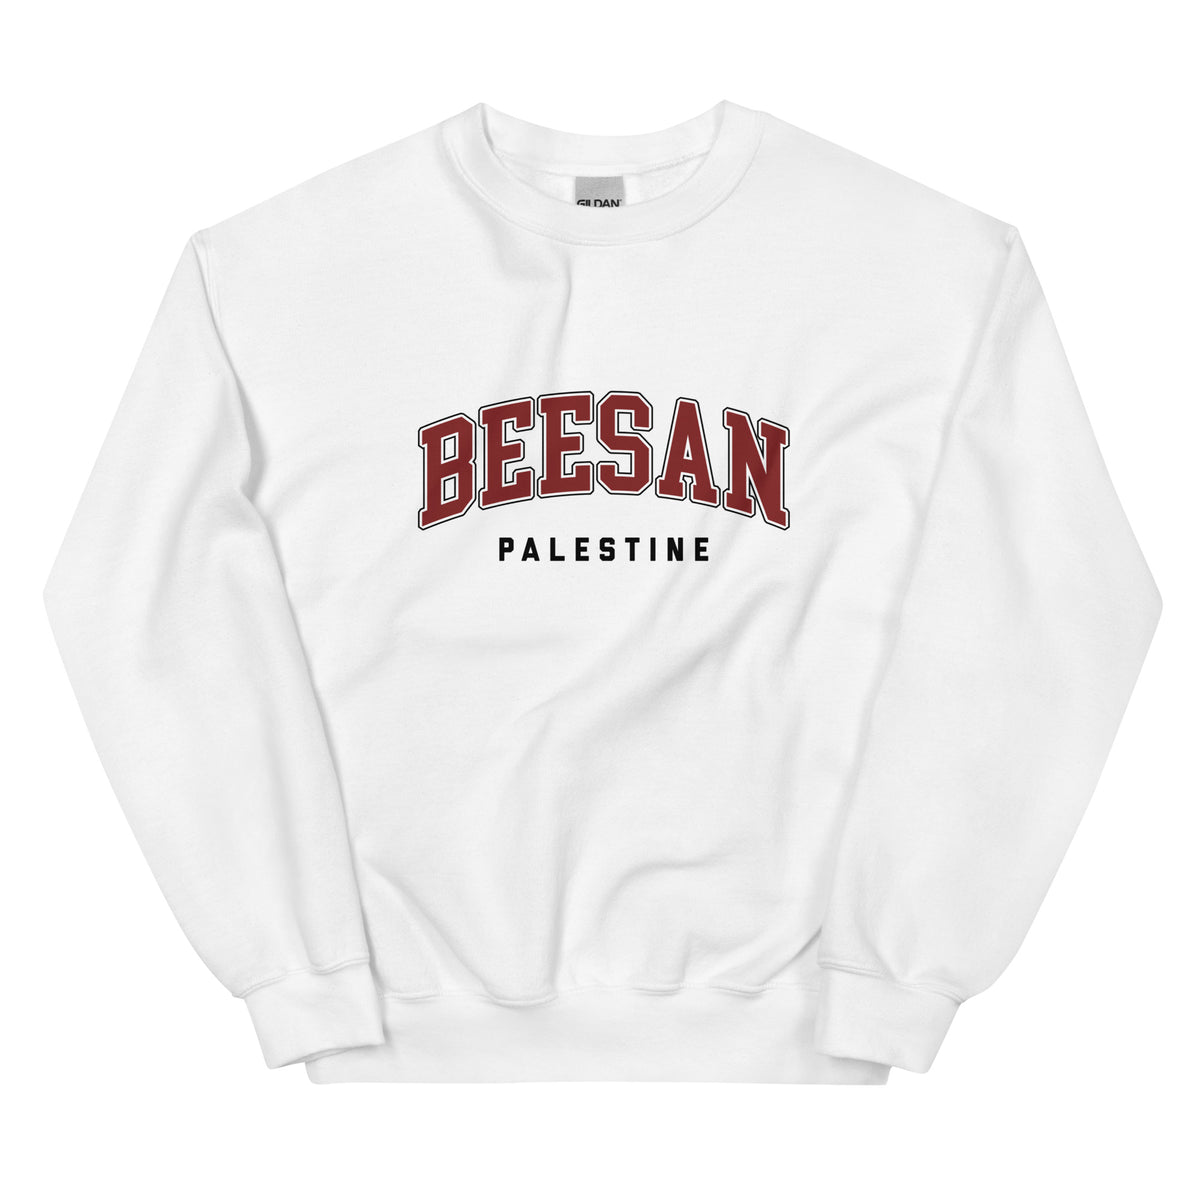 Beesan, Palestine - Sweatshirt